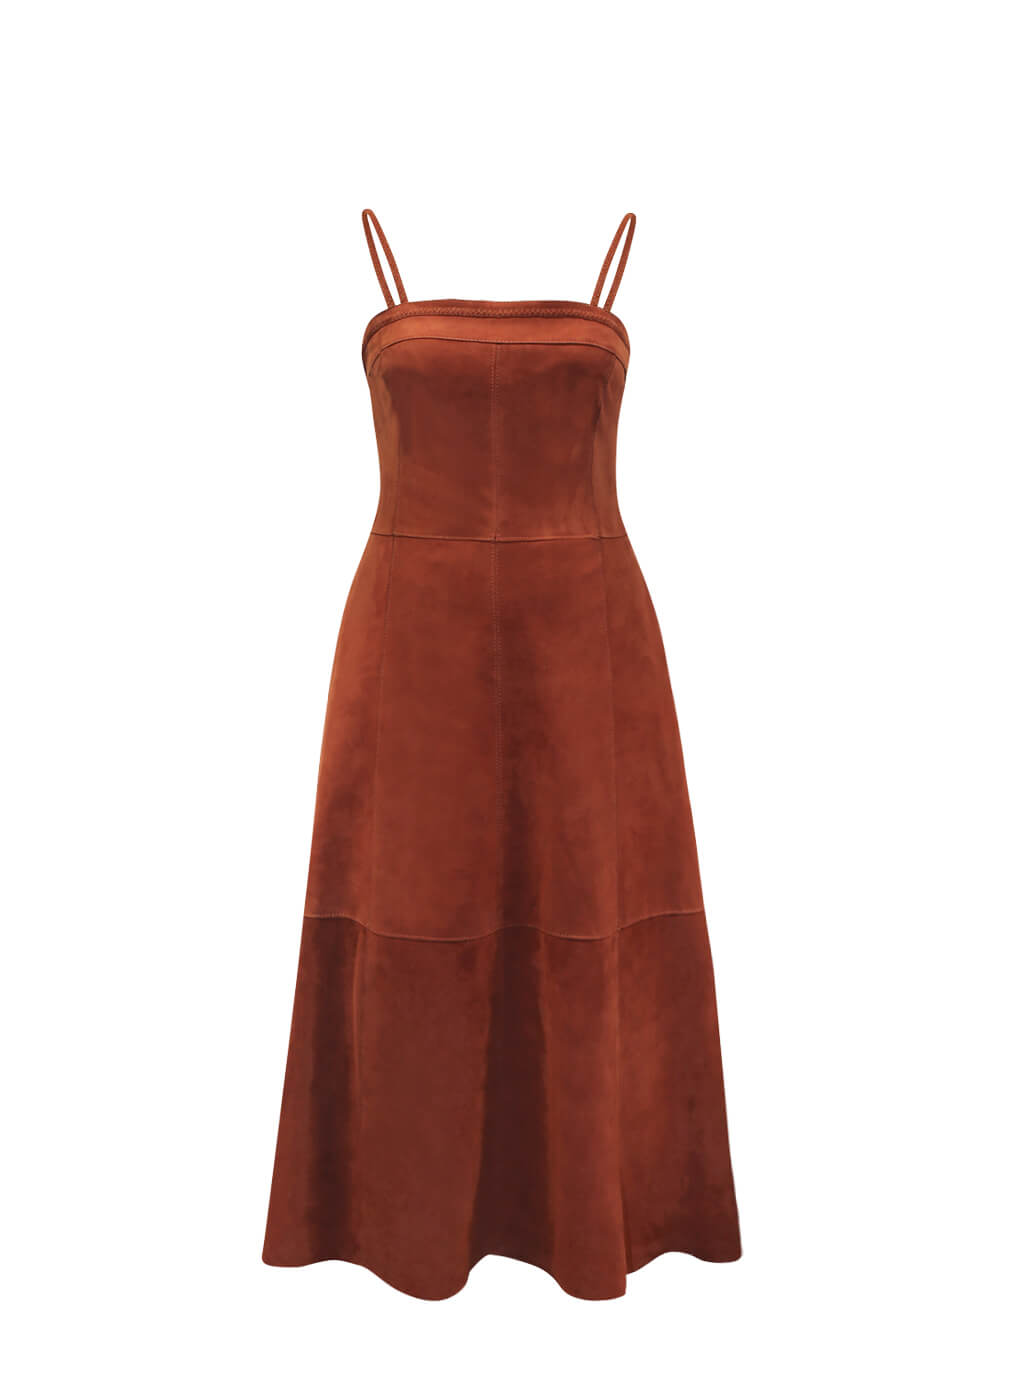 Goat Leather Dress “Malibu Strap”, rusted red